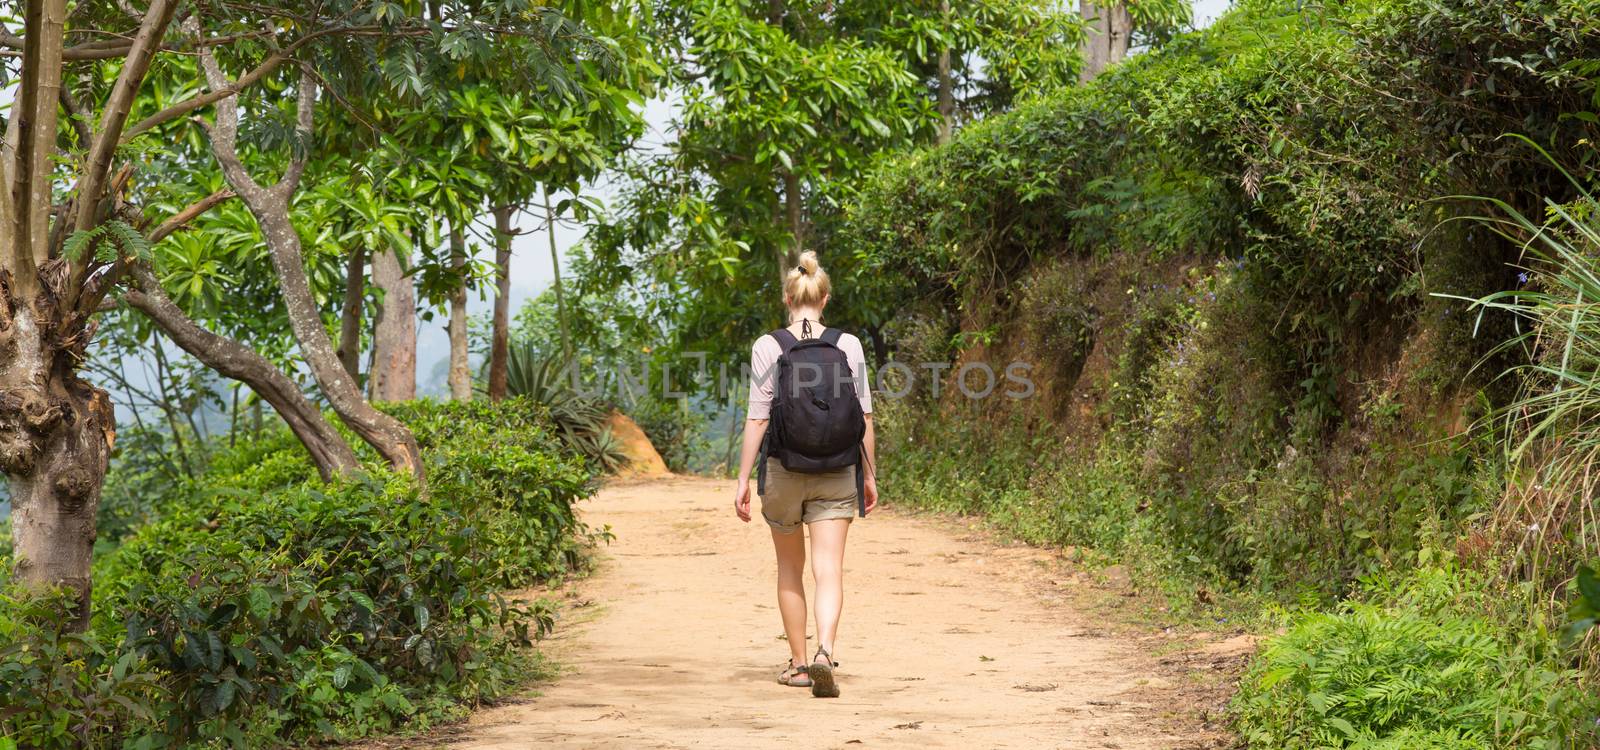 Active caucasian blonde woman enjoyng fresh air and pristine nature while tracking among tea plantatons near Ella, Sri Lanka. Backpecking outdoors tourist adventure.